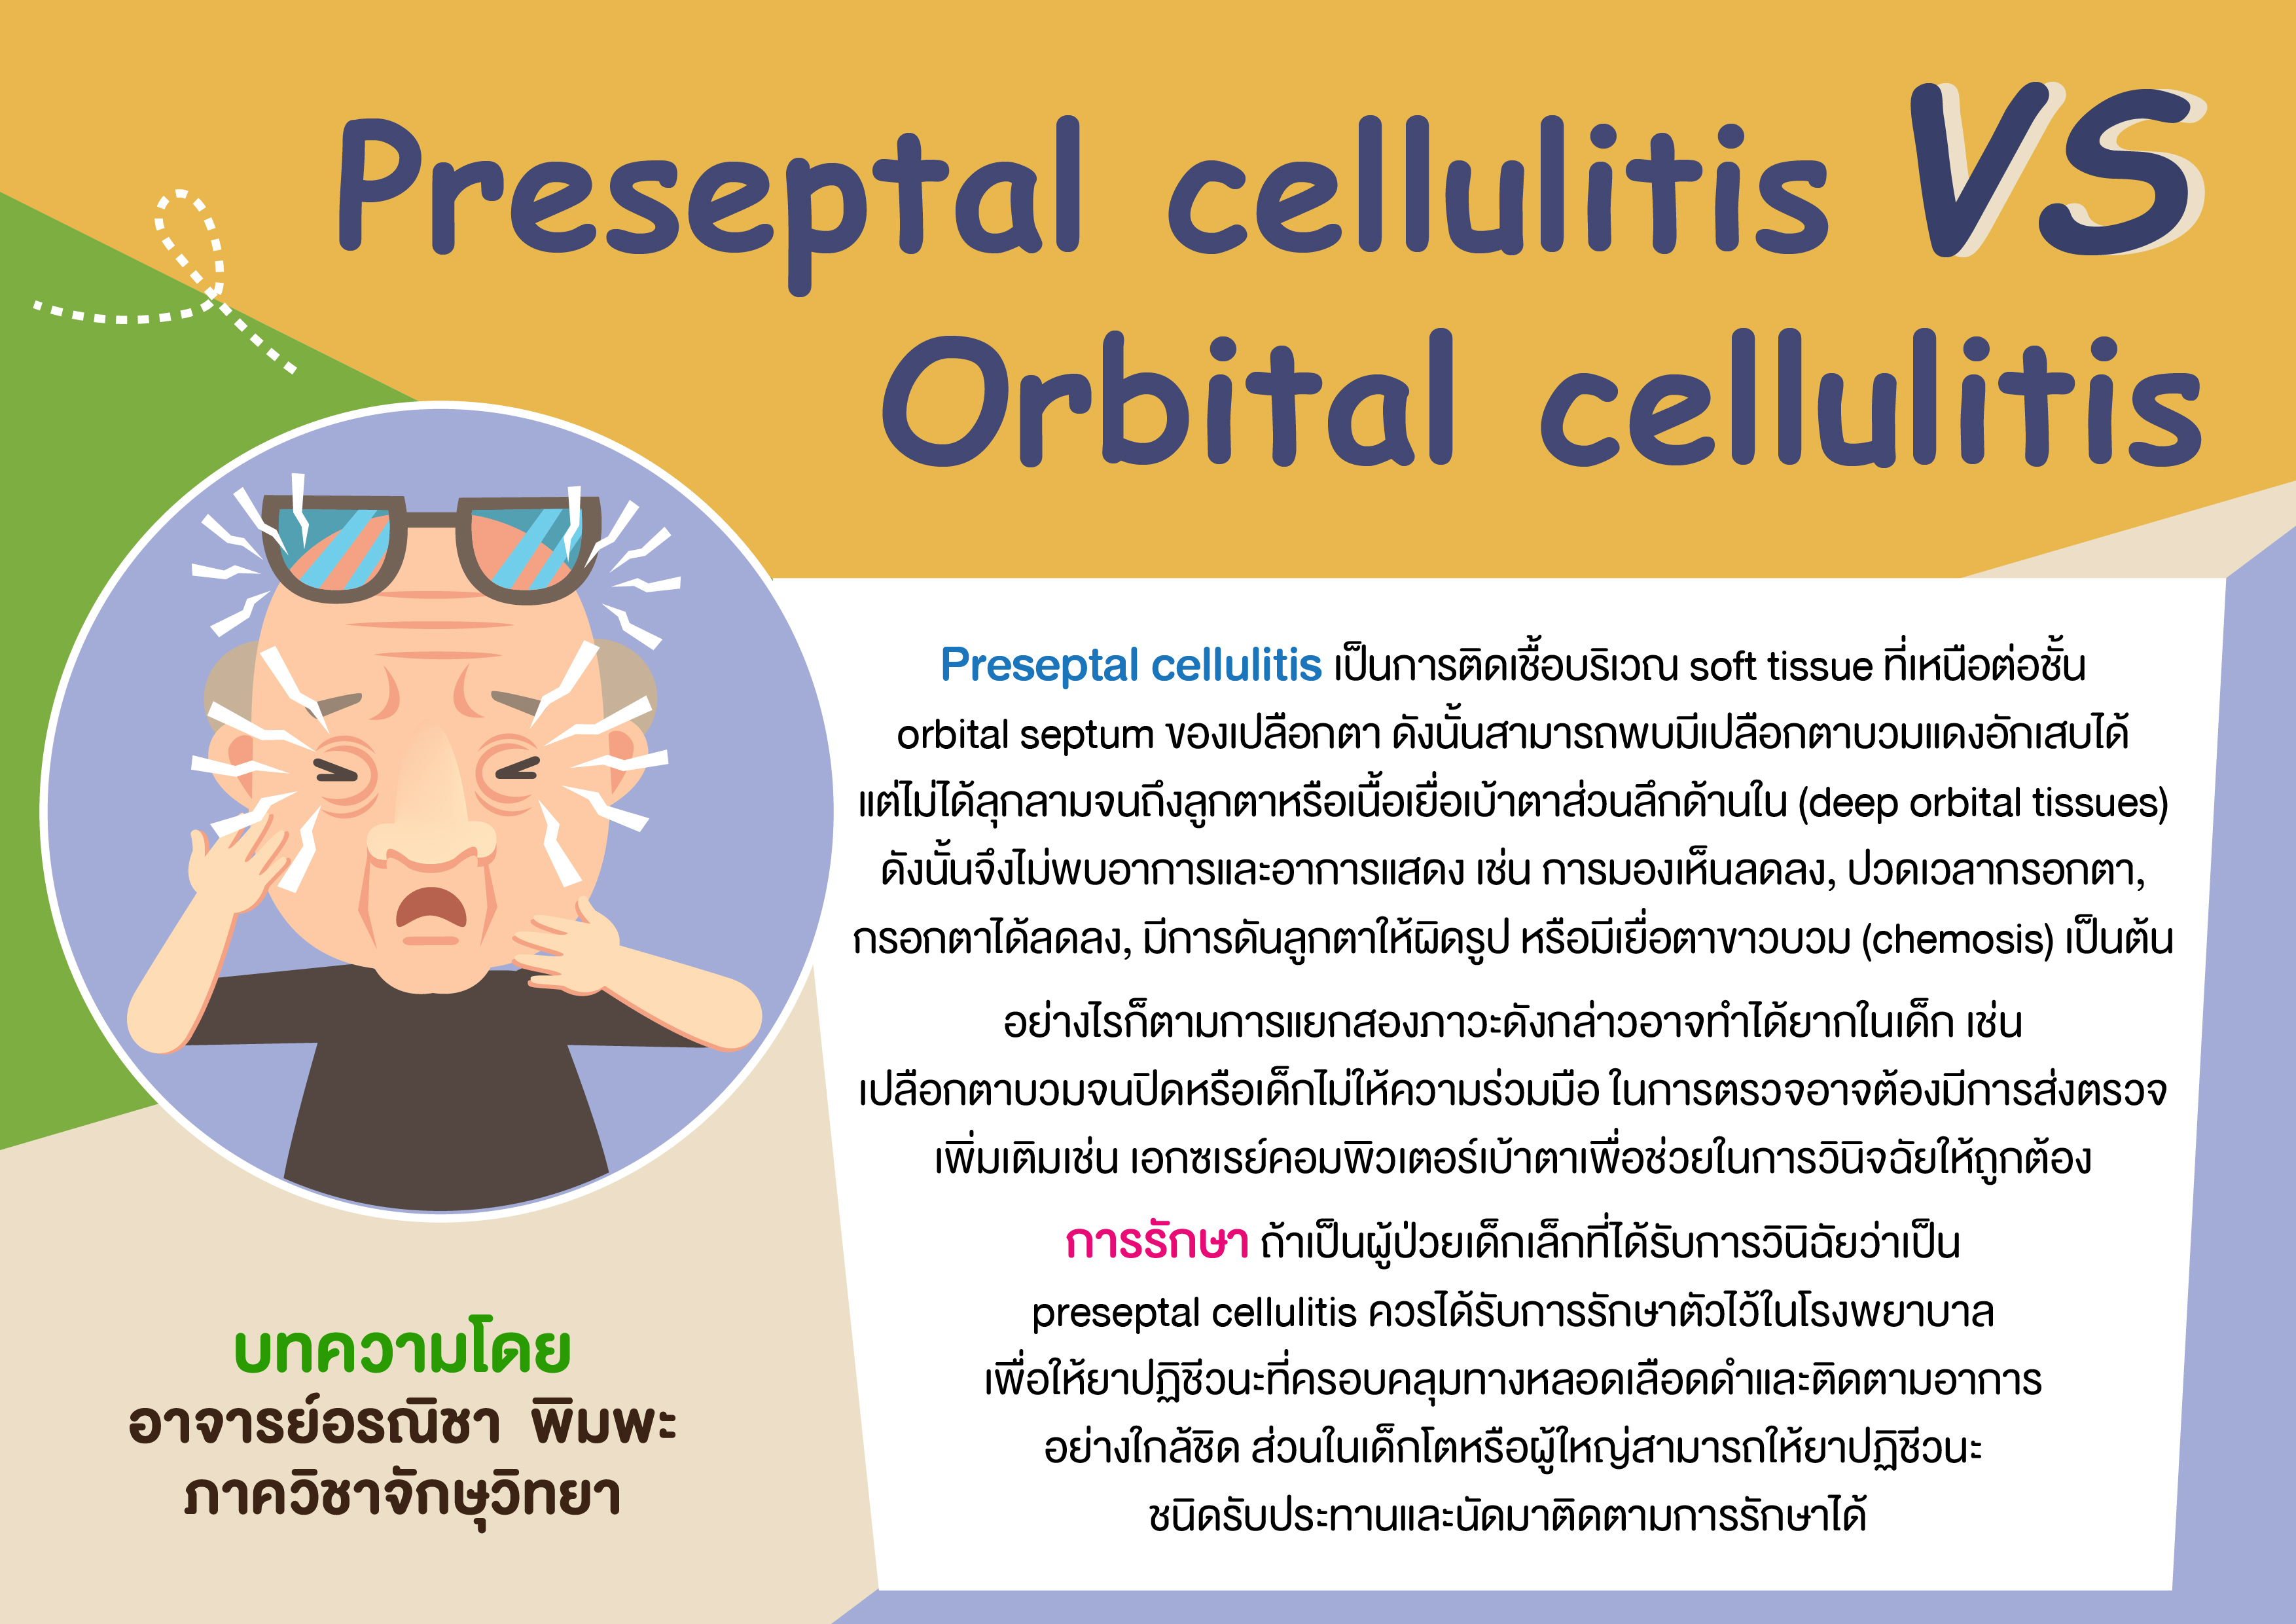 preseptal cellulitis VS Orbital cellulitis